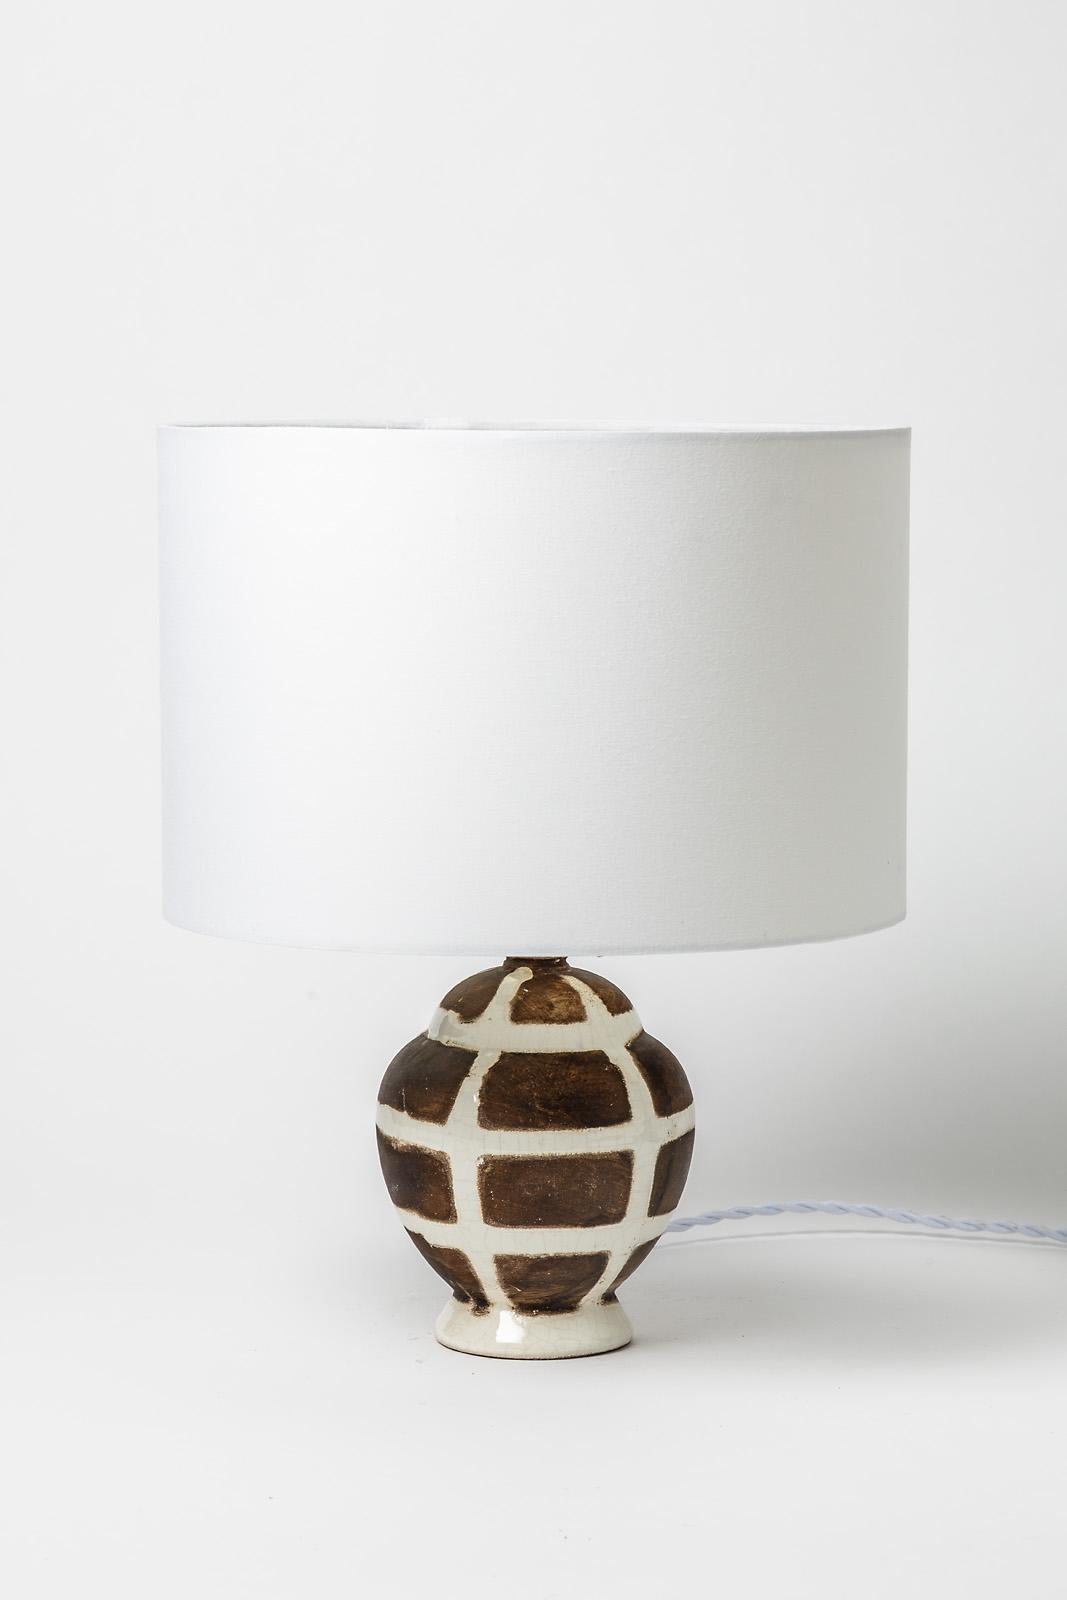 20th Century Art Decorative Midcentury Ceramic Table Lamp White and Brown Att. Jean Besnard